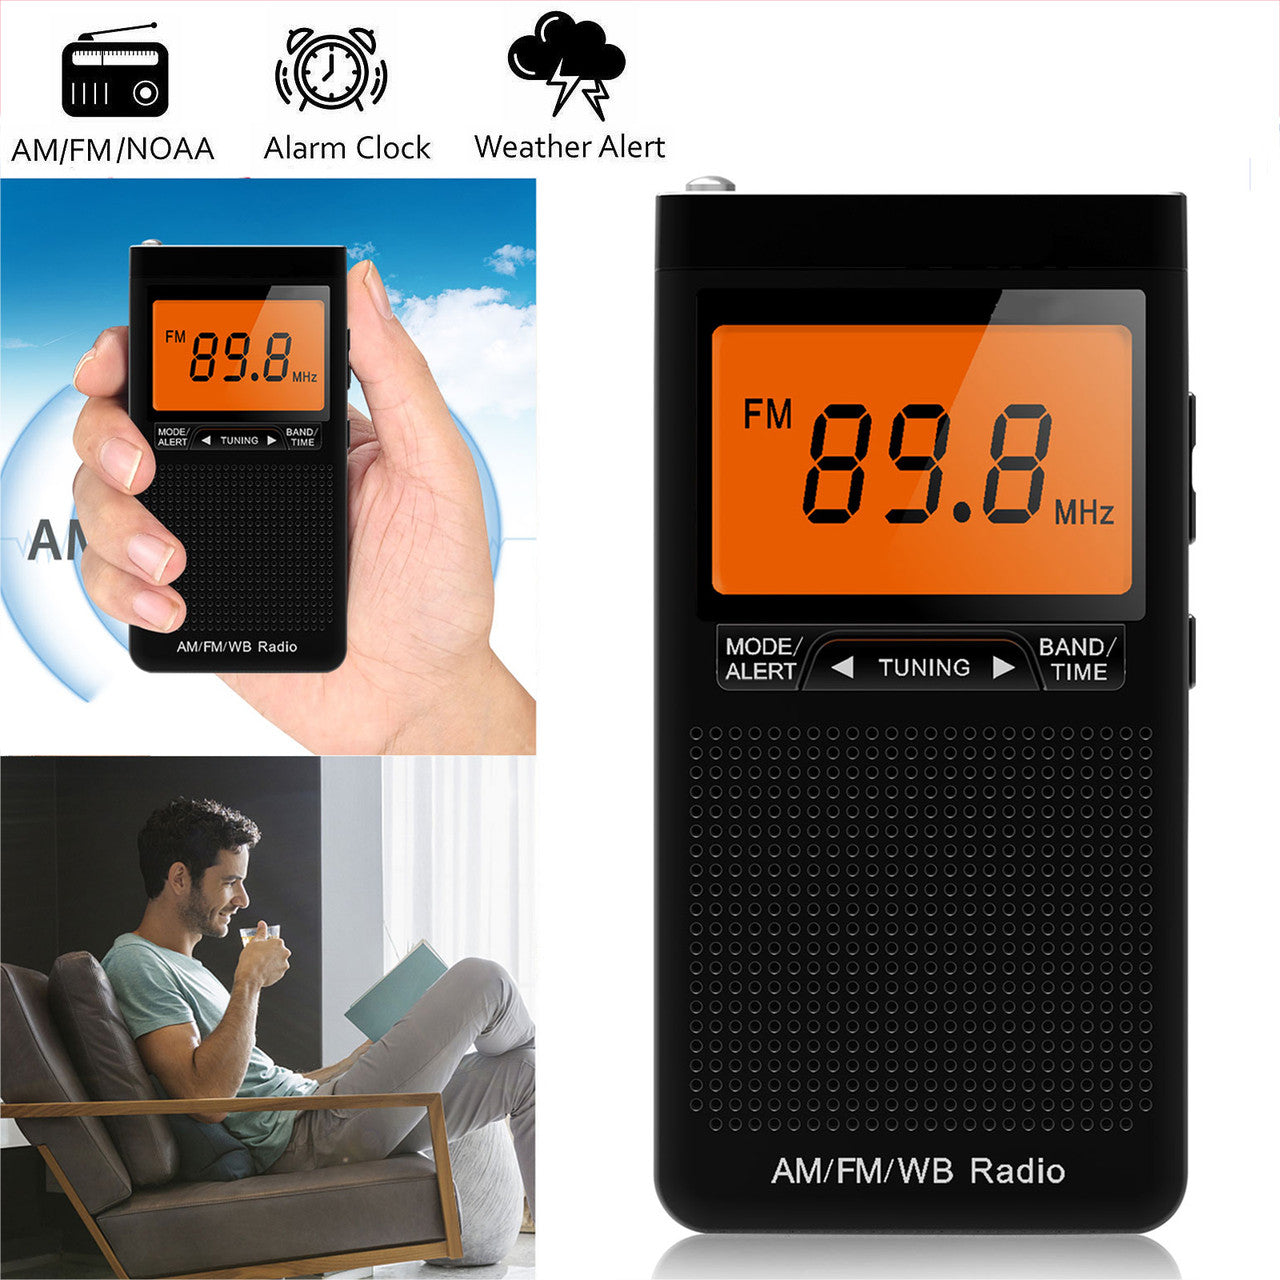 NOAA Weather Alert Radio, Portable AM/FM Battery Operated Transistor Radio with Headphone Jack, Great Reception, Alarm Clock, LCD Display, Pocket Radio for Office, Bedroom, Running, Walking